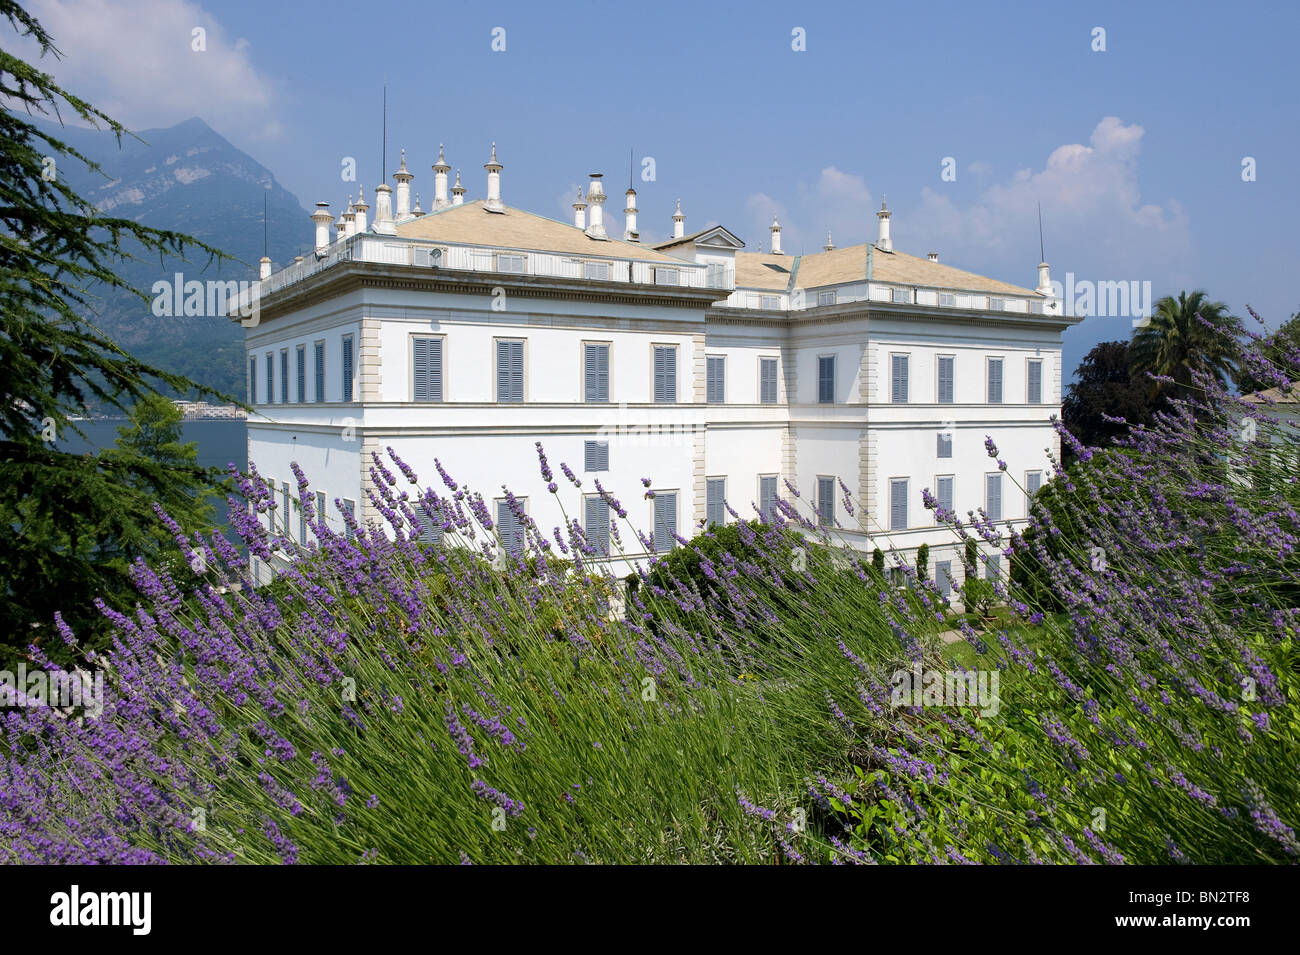 villa melzi, bellagio, lake como, italy Stock Photo